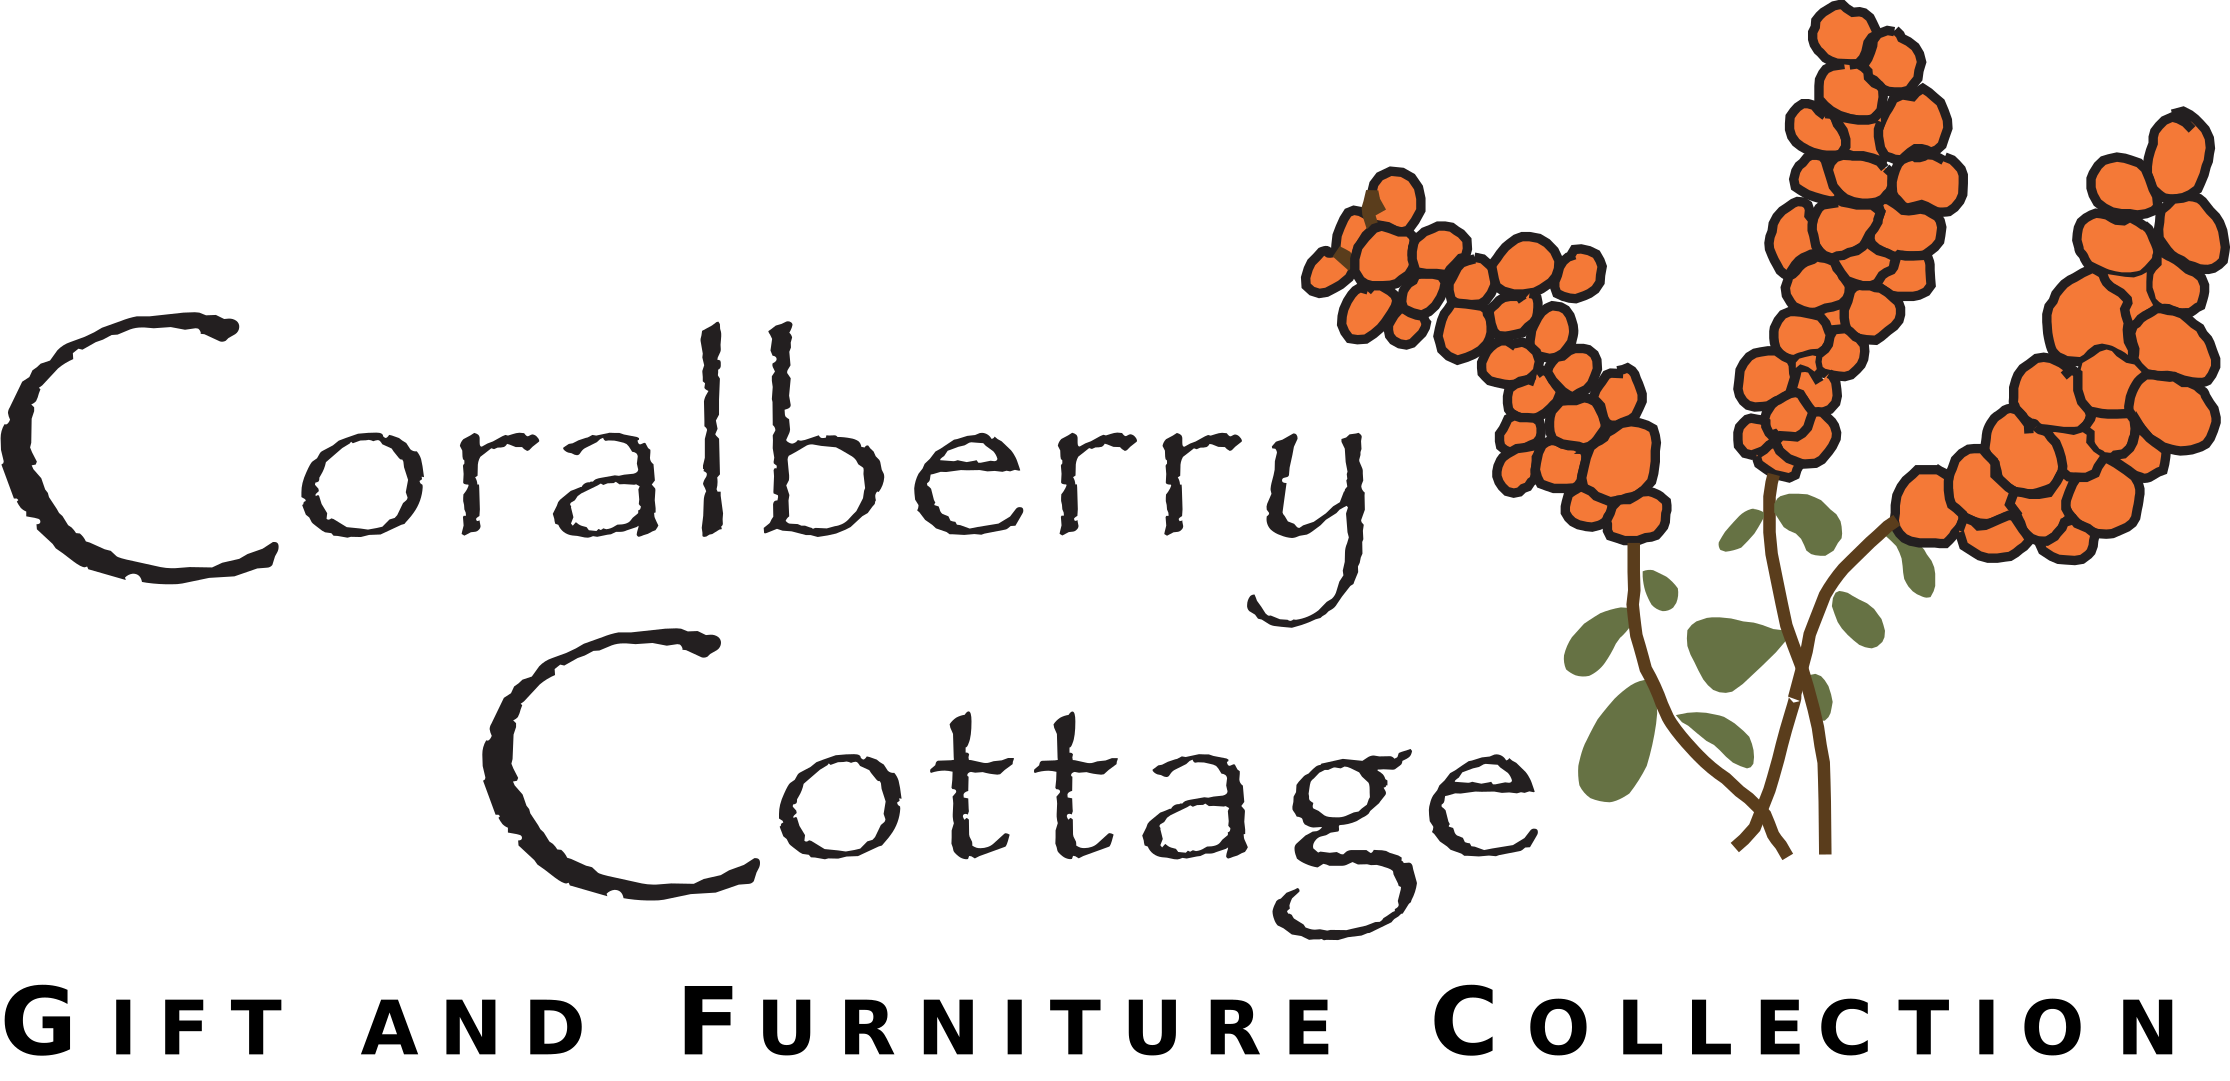 Charleston Coastal Cottage Design - | Coralberry Cottage | Mount Pleasant, SC